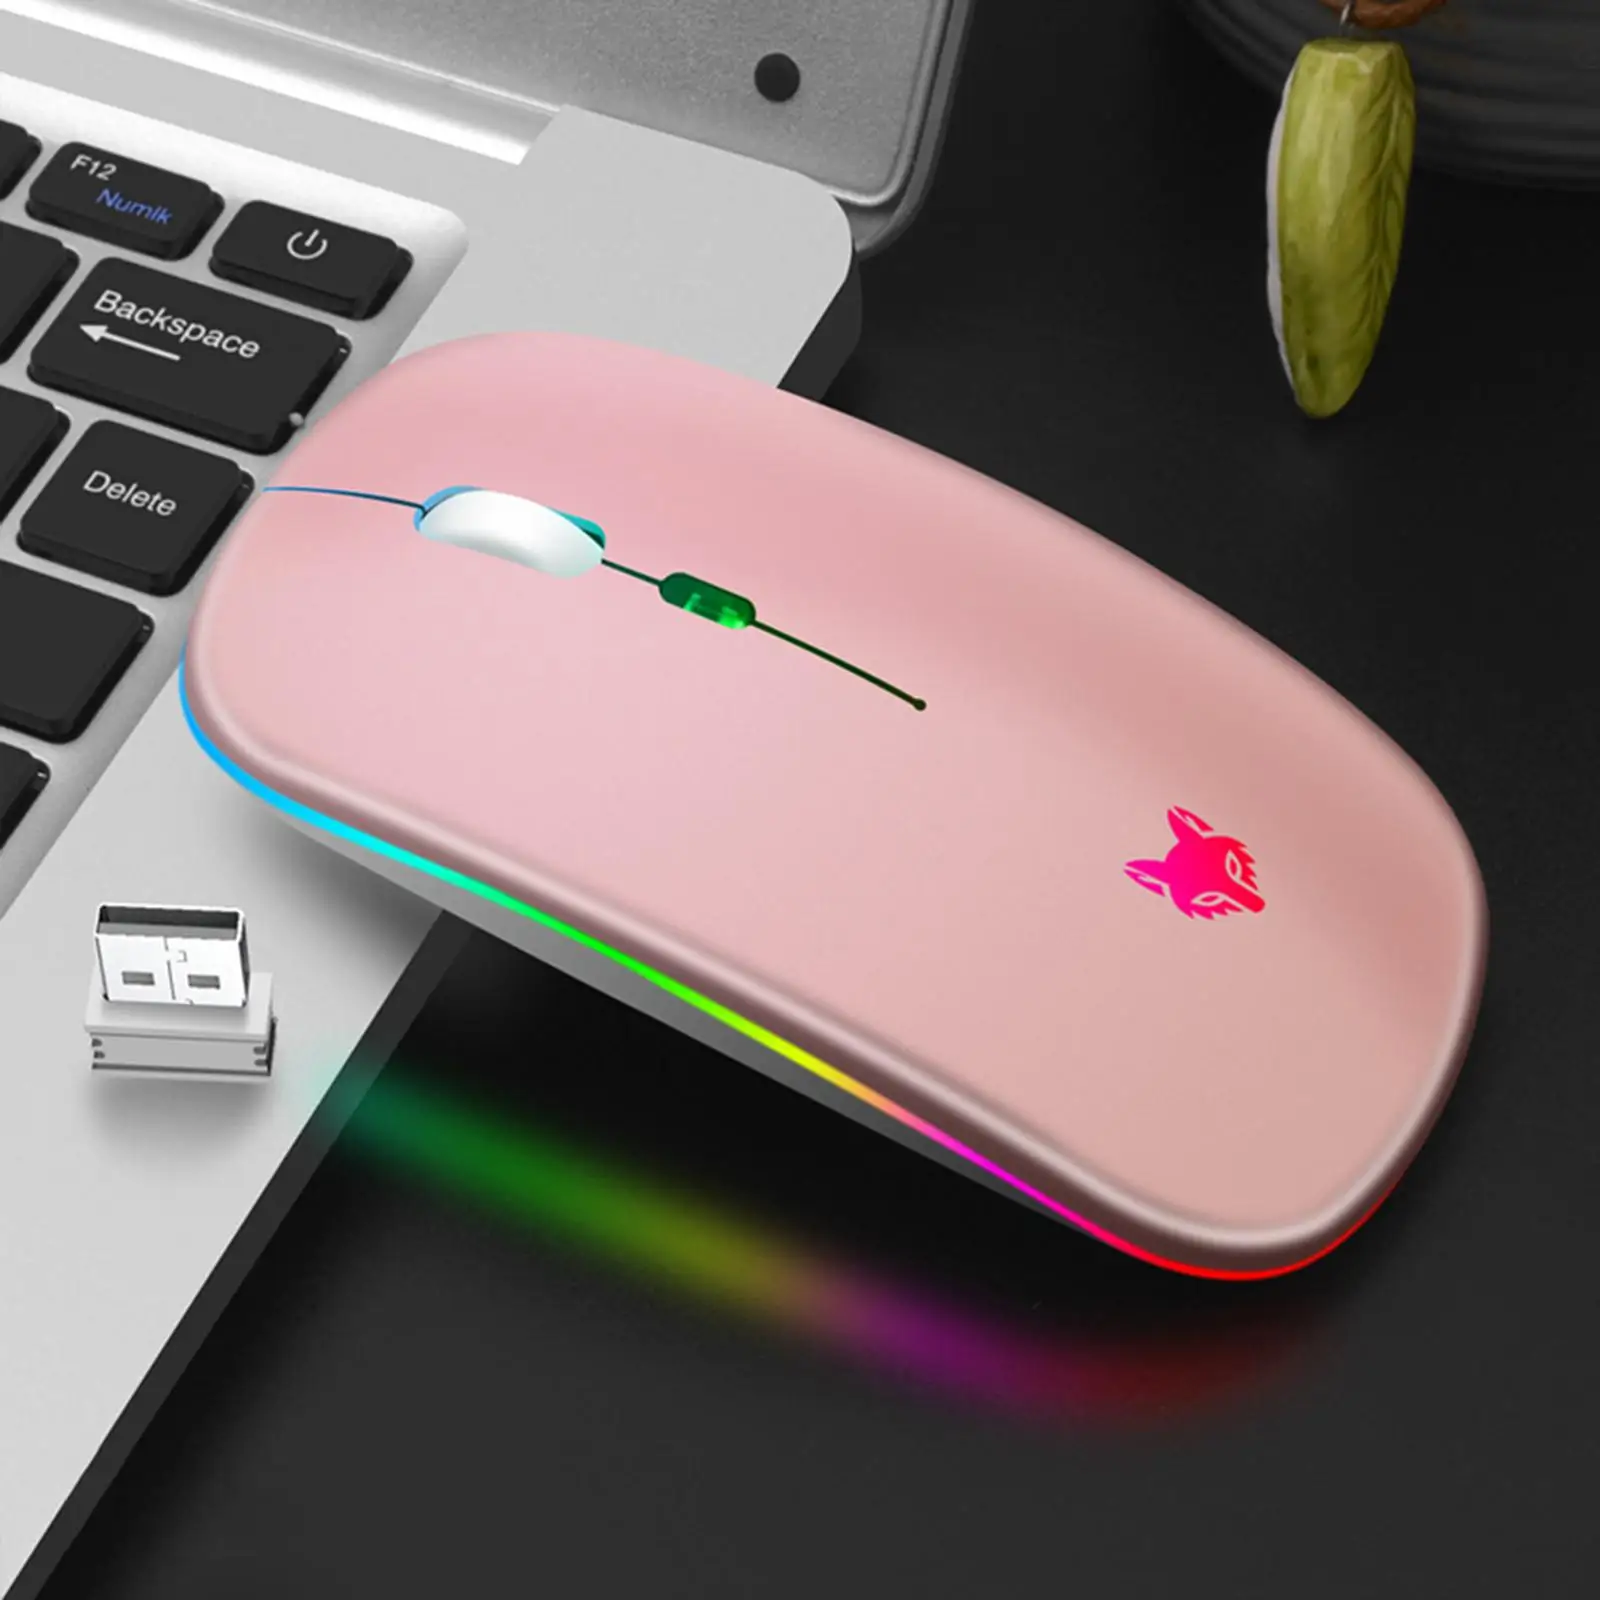 Slim LED Wireless Mouse 2.4G Luminous Ergonomic USB Rechargeable RGB Mouse for Laptop PC Mute Mice 800 1200 1600DPI Travel